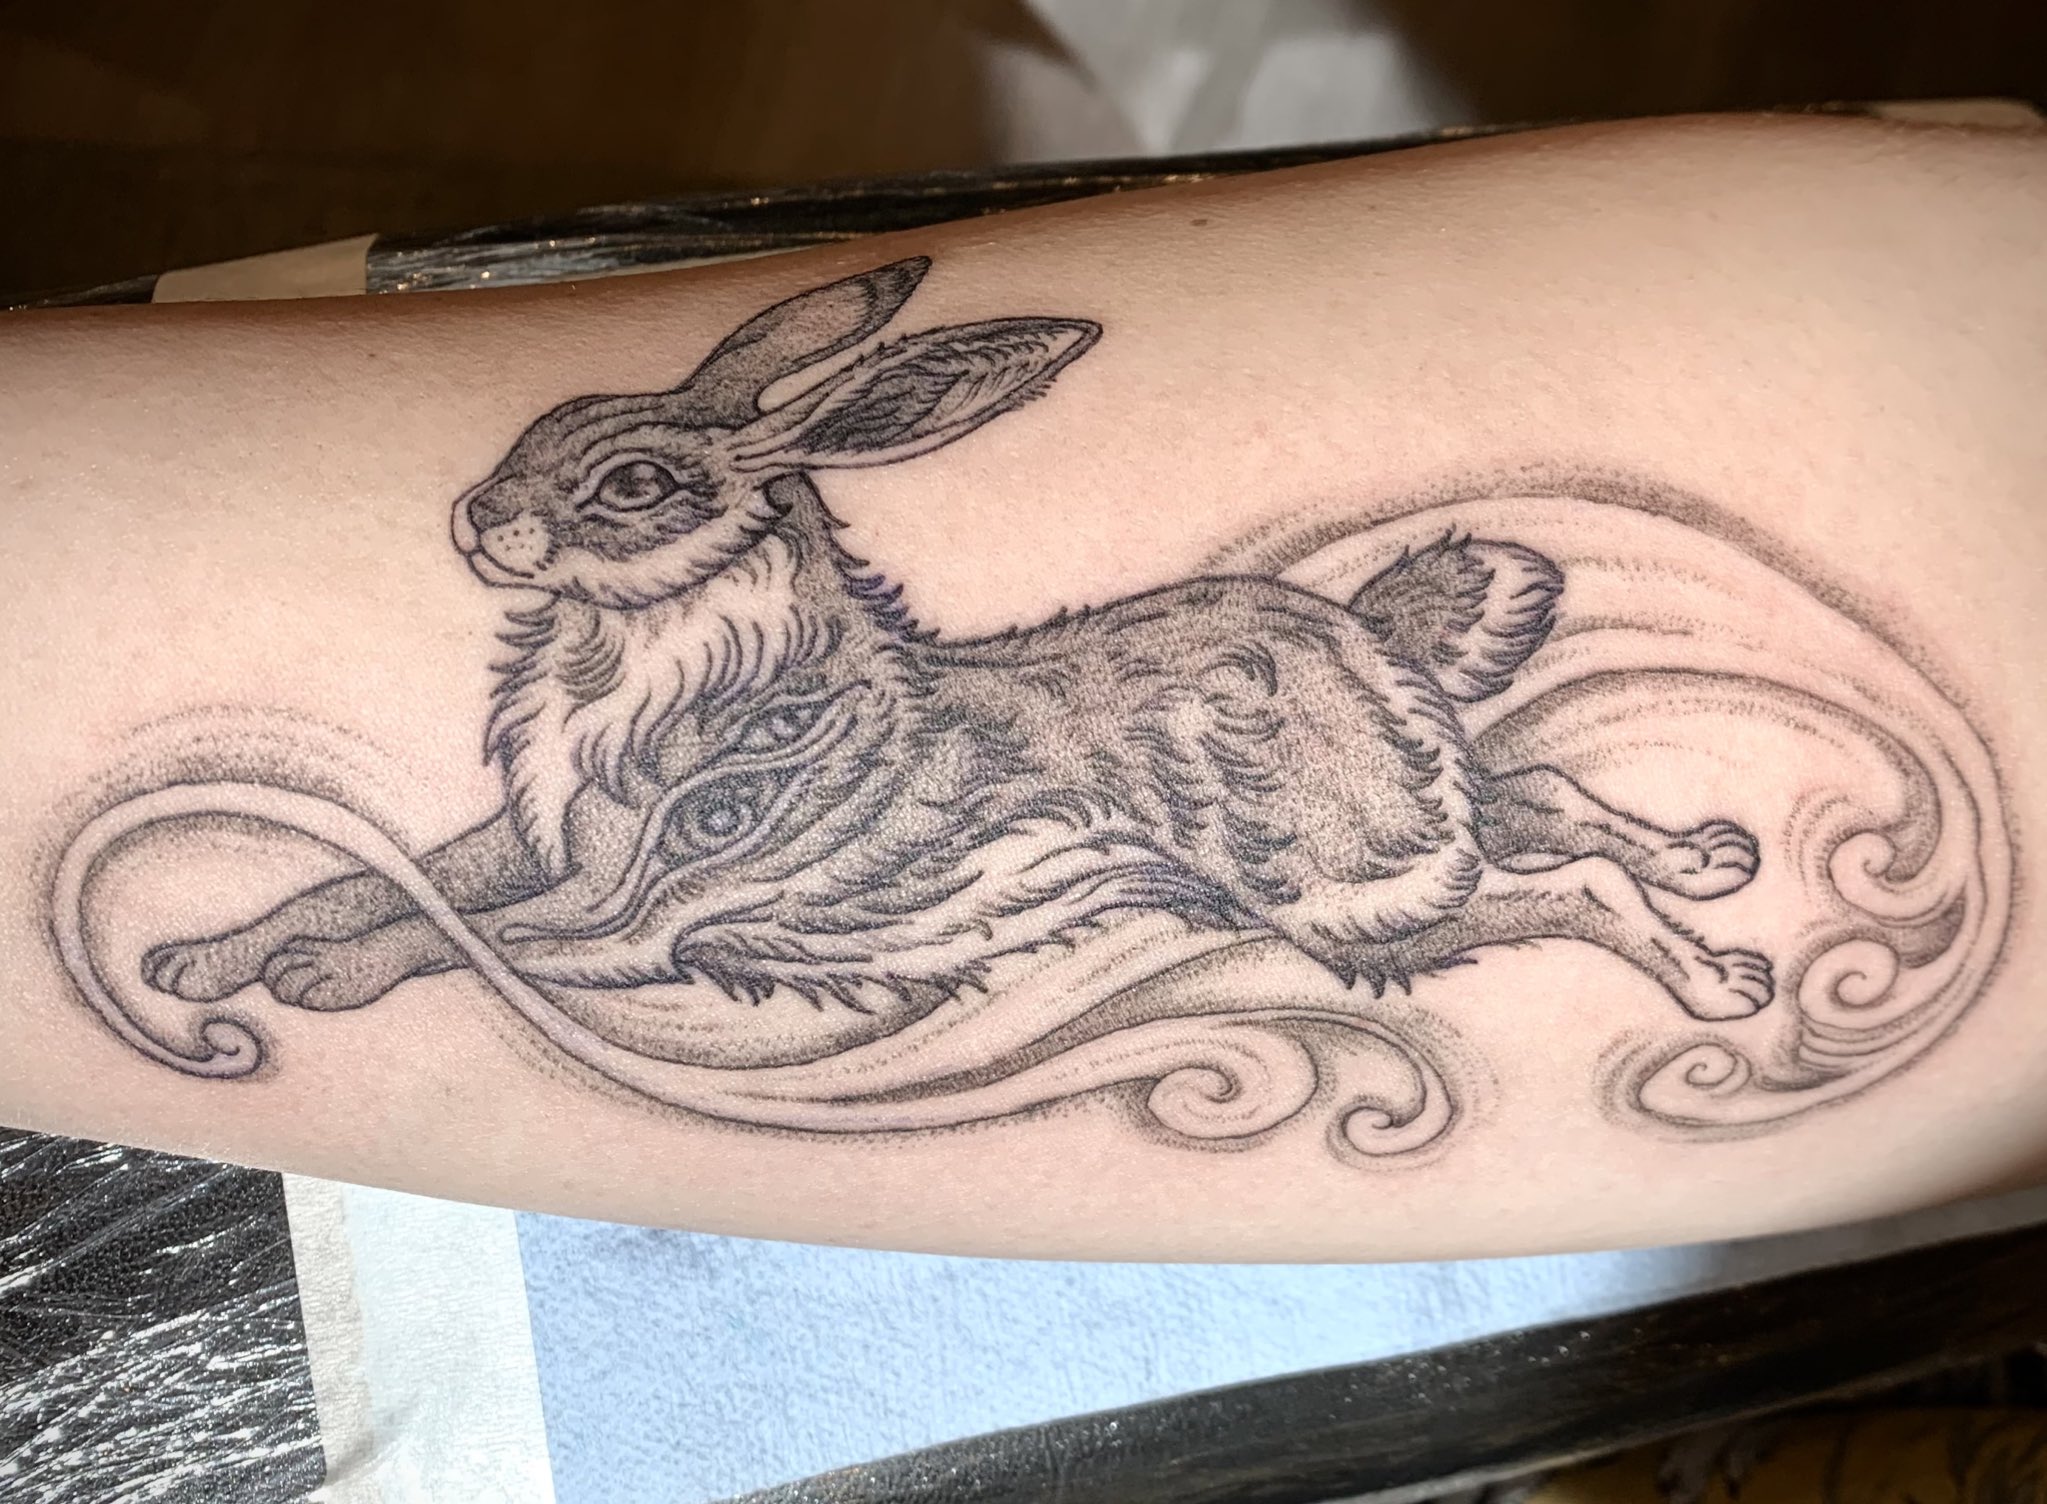 50 Beautiful Bunny Tattoos